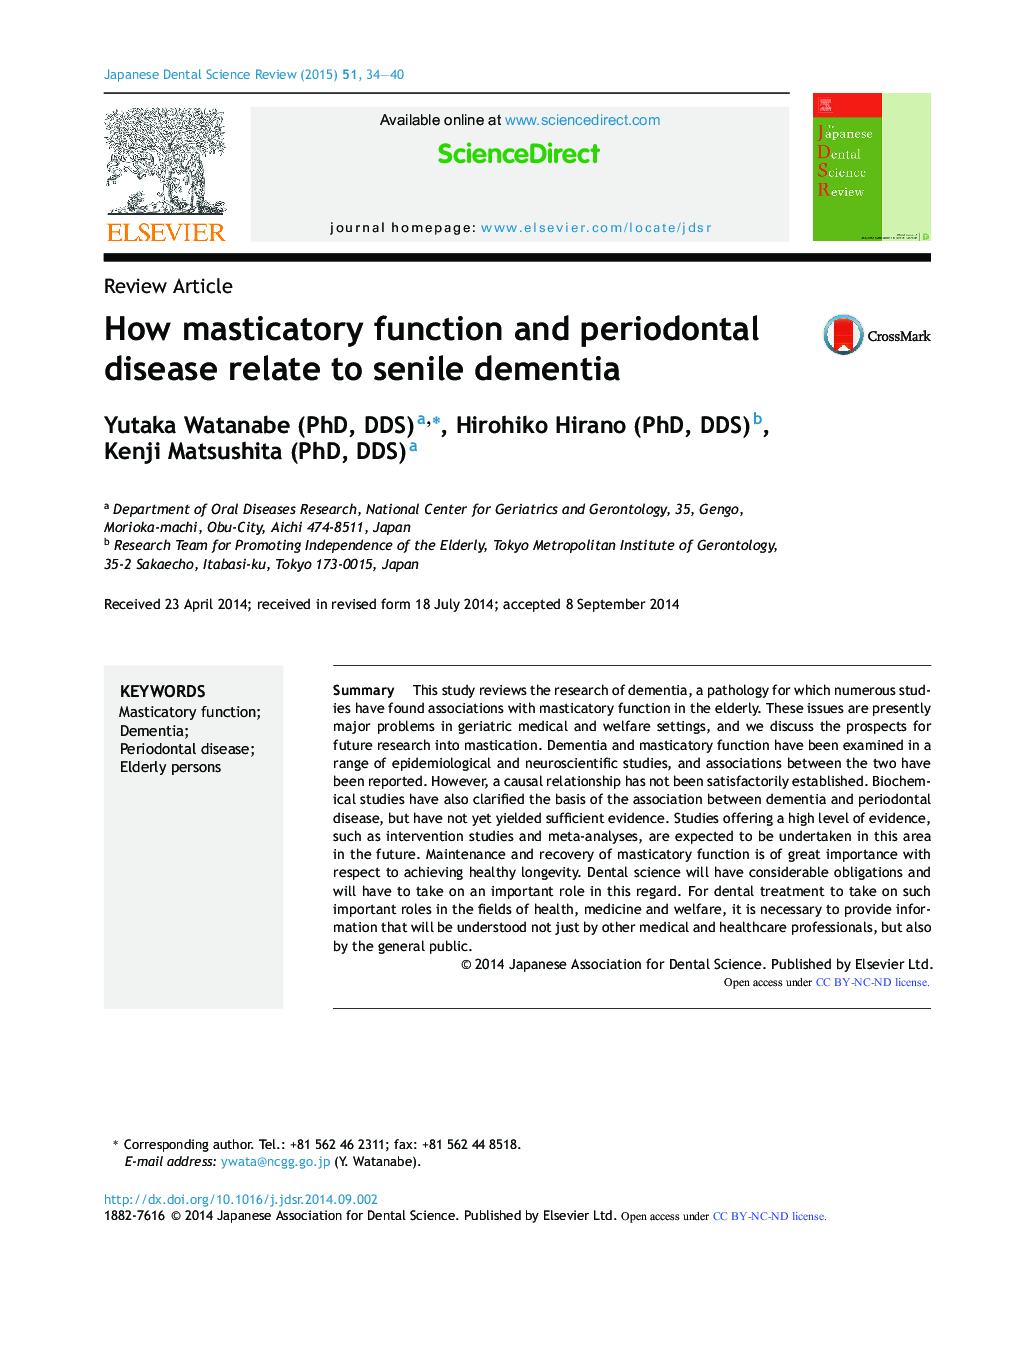 How masticatory function and periodontal disease relate to senile dementia